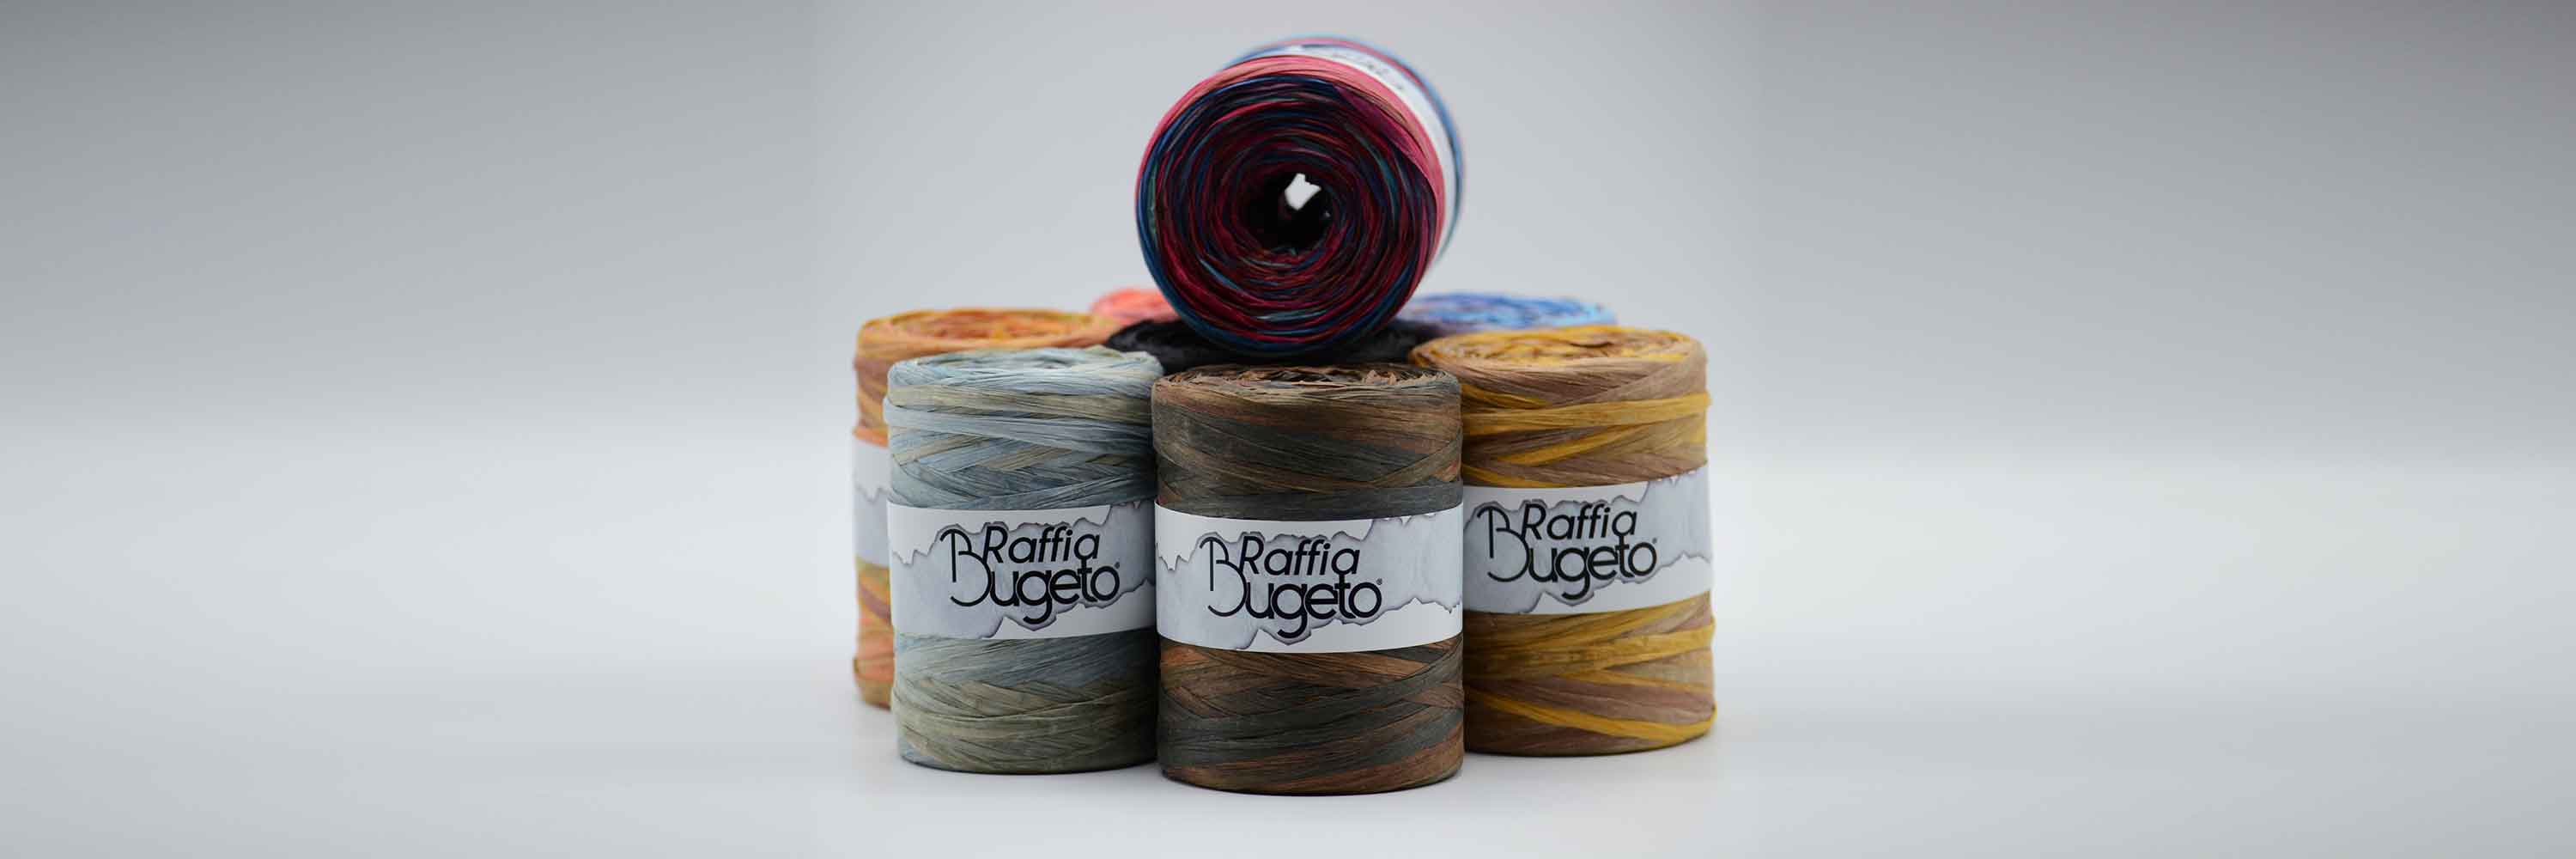 rafia paper paper like yarn pap yarn knitting paper yarns bugeto yarn